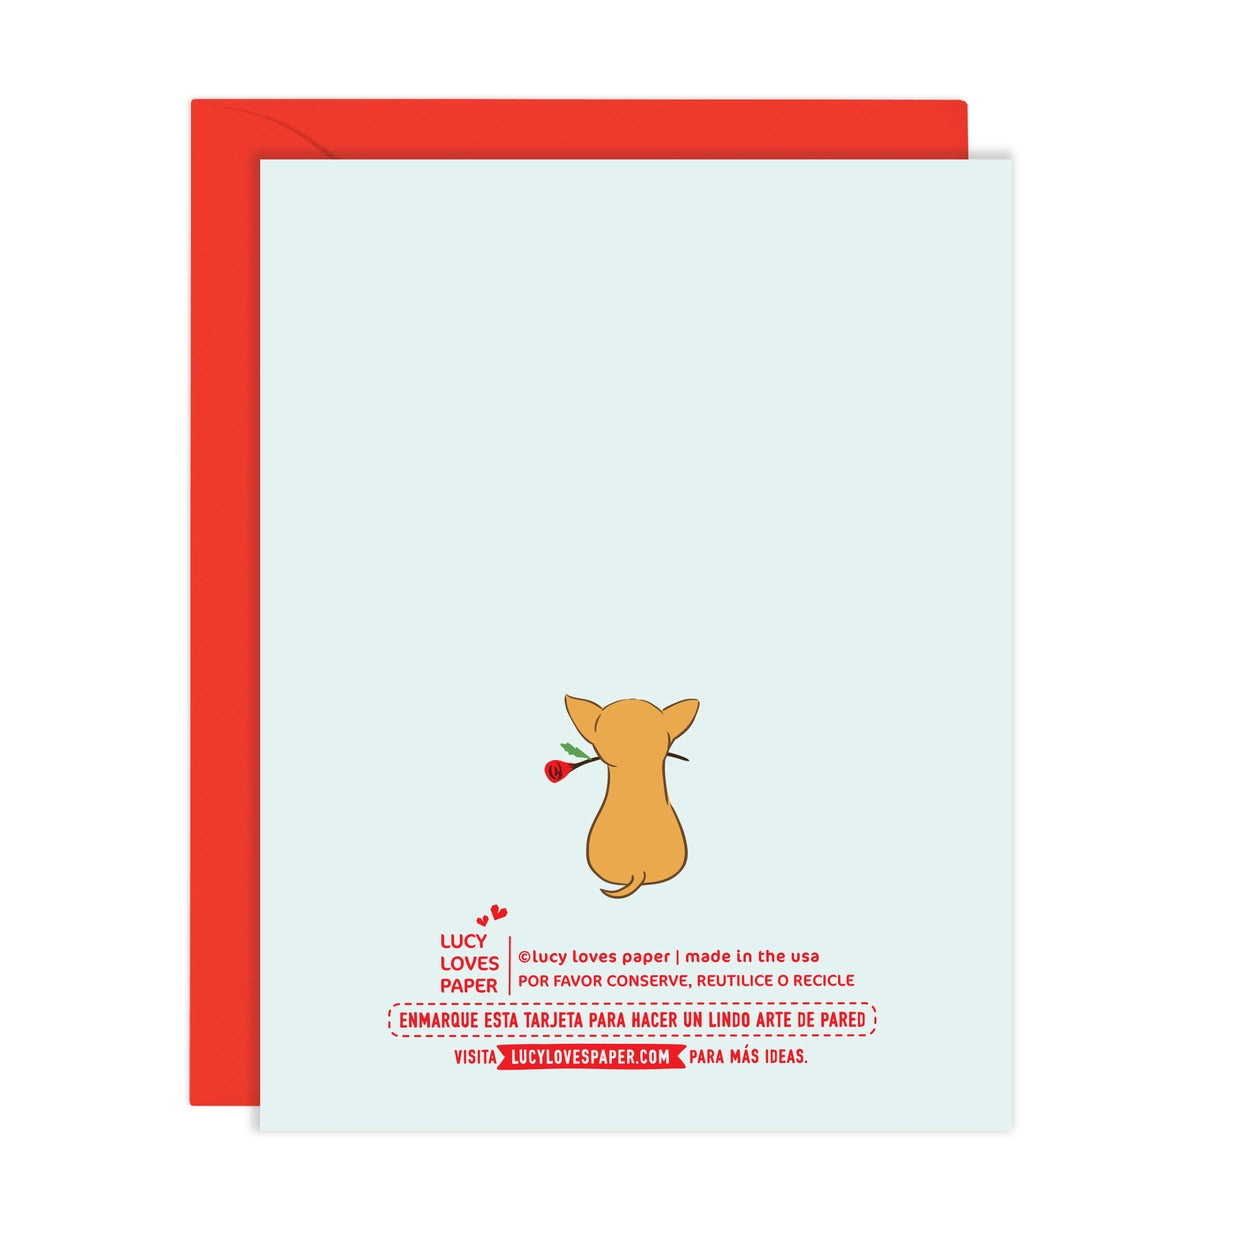 Te Adoro - Chihuahua Love Card in Spanish (A2)  *pre-order* - Las Ofrendas 